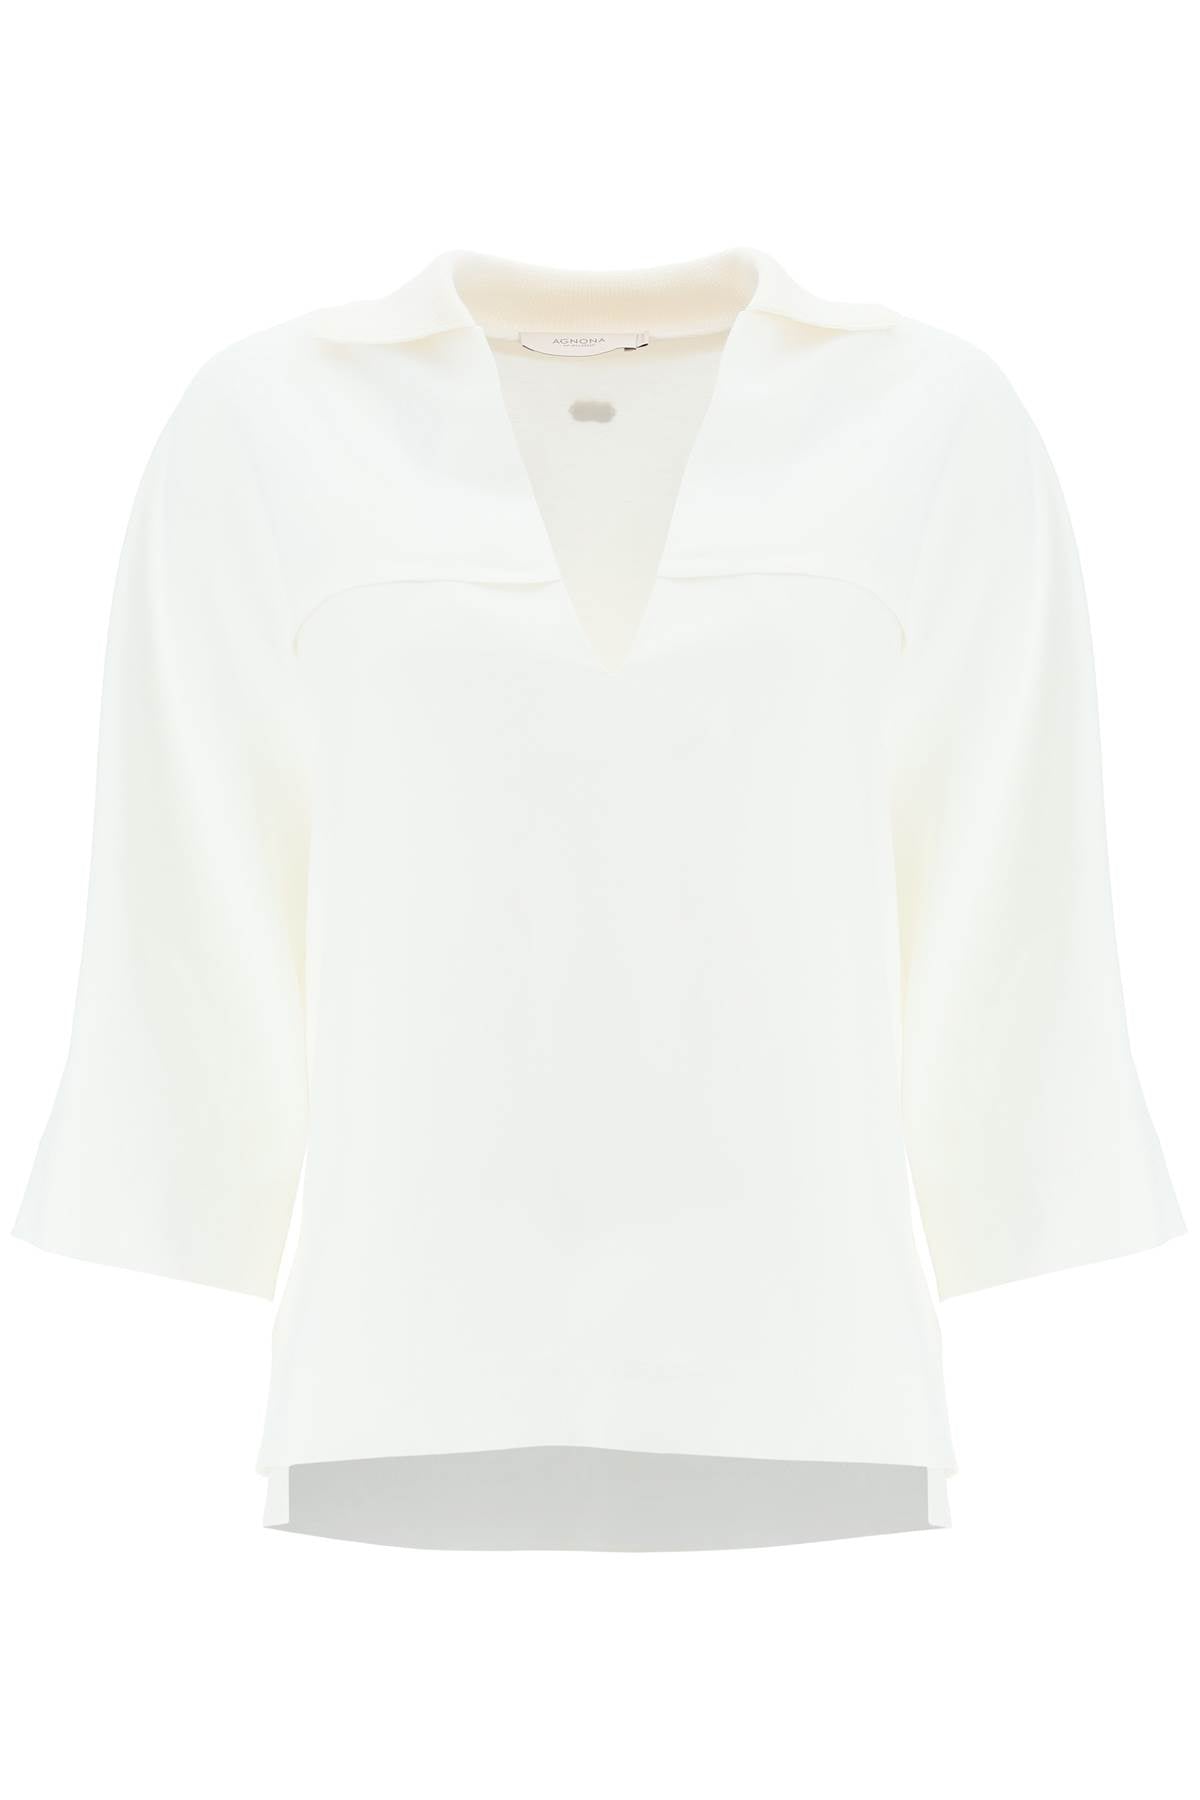 Agnona linen viscose polo blouse TT0501 Y U3011 WHITE